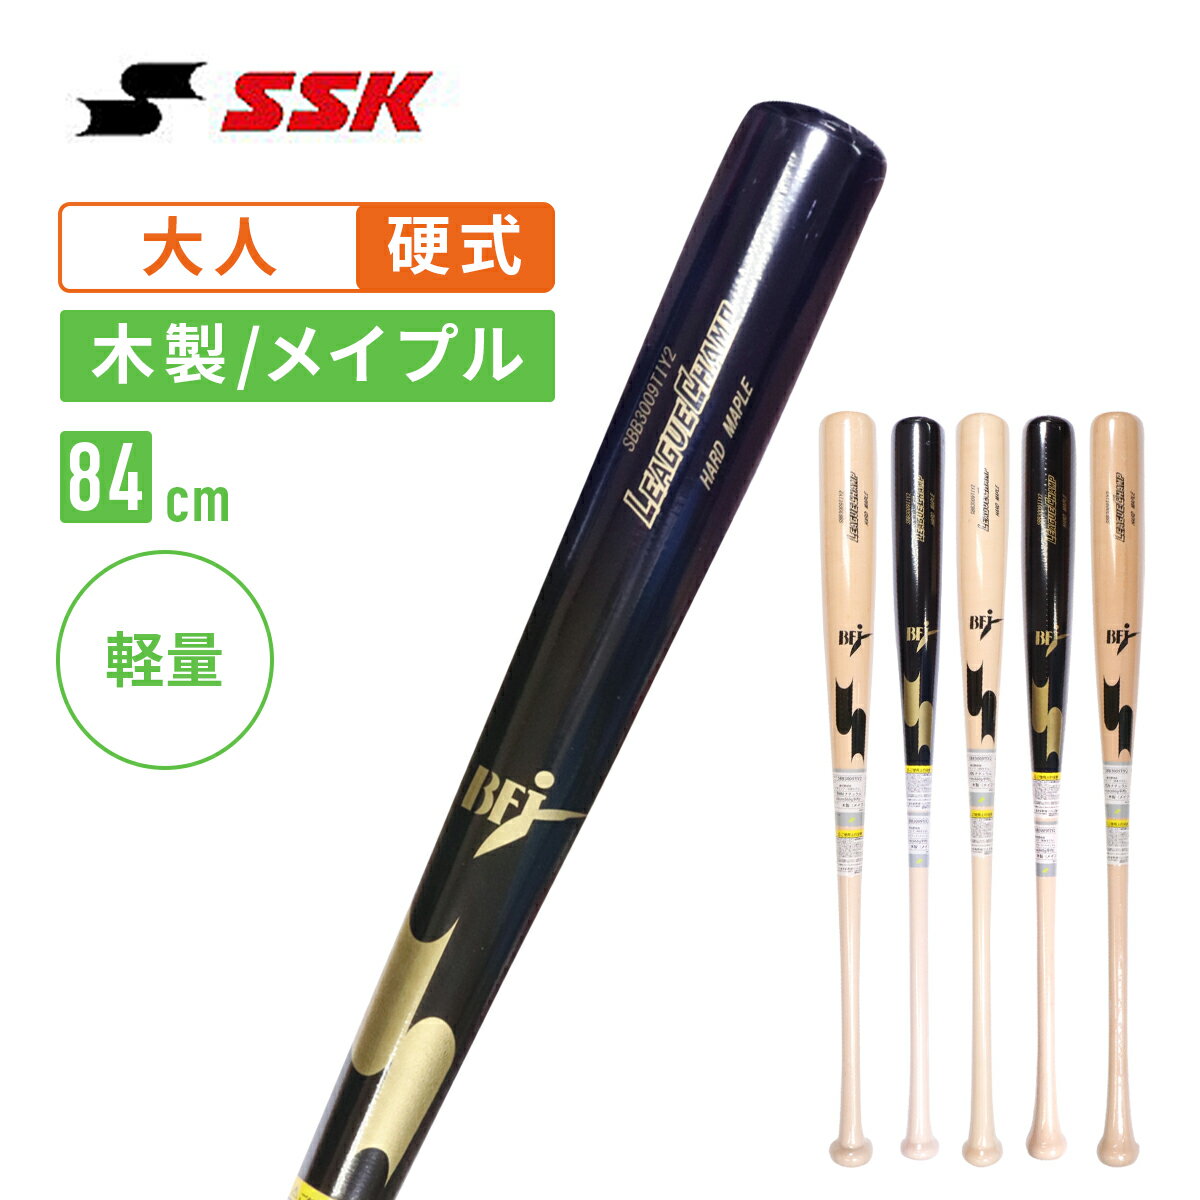 SSK 野球館オリジナル 硬式木製バット SSK エスエスケイ メイプル 軽量 sbb3009 84cm 860g